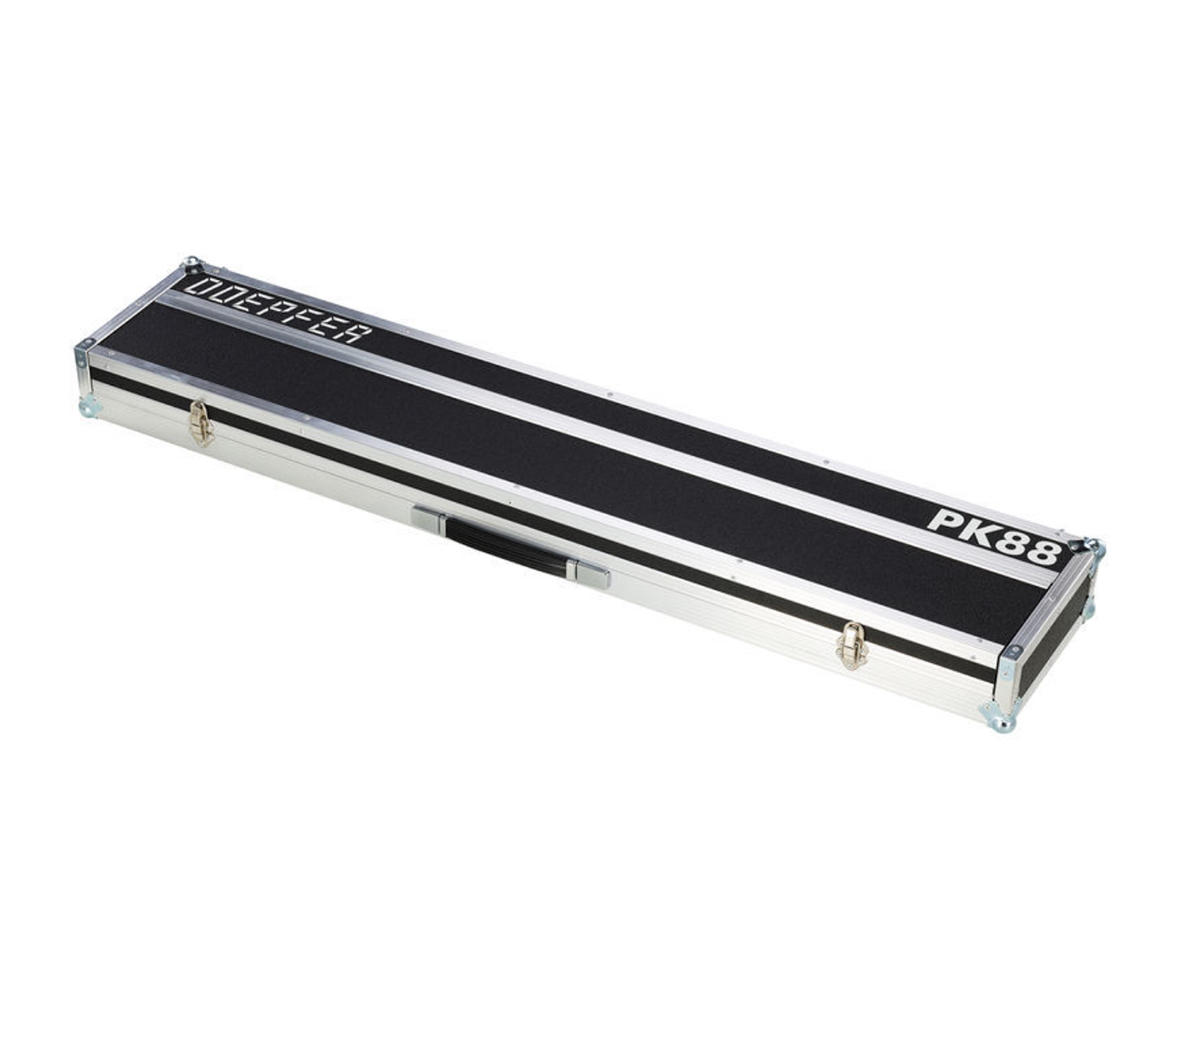 TECLADO CONTROLADOR MIDI USB DOEPFER PK88 BLACK